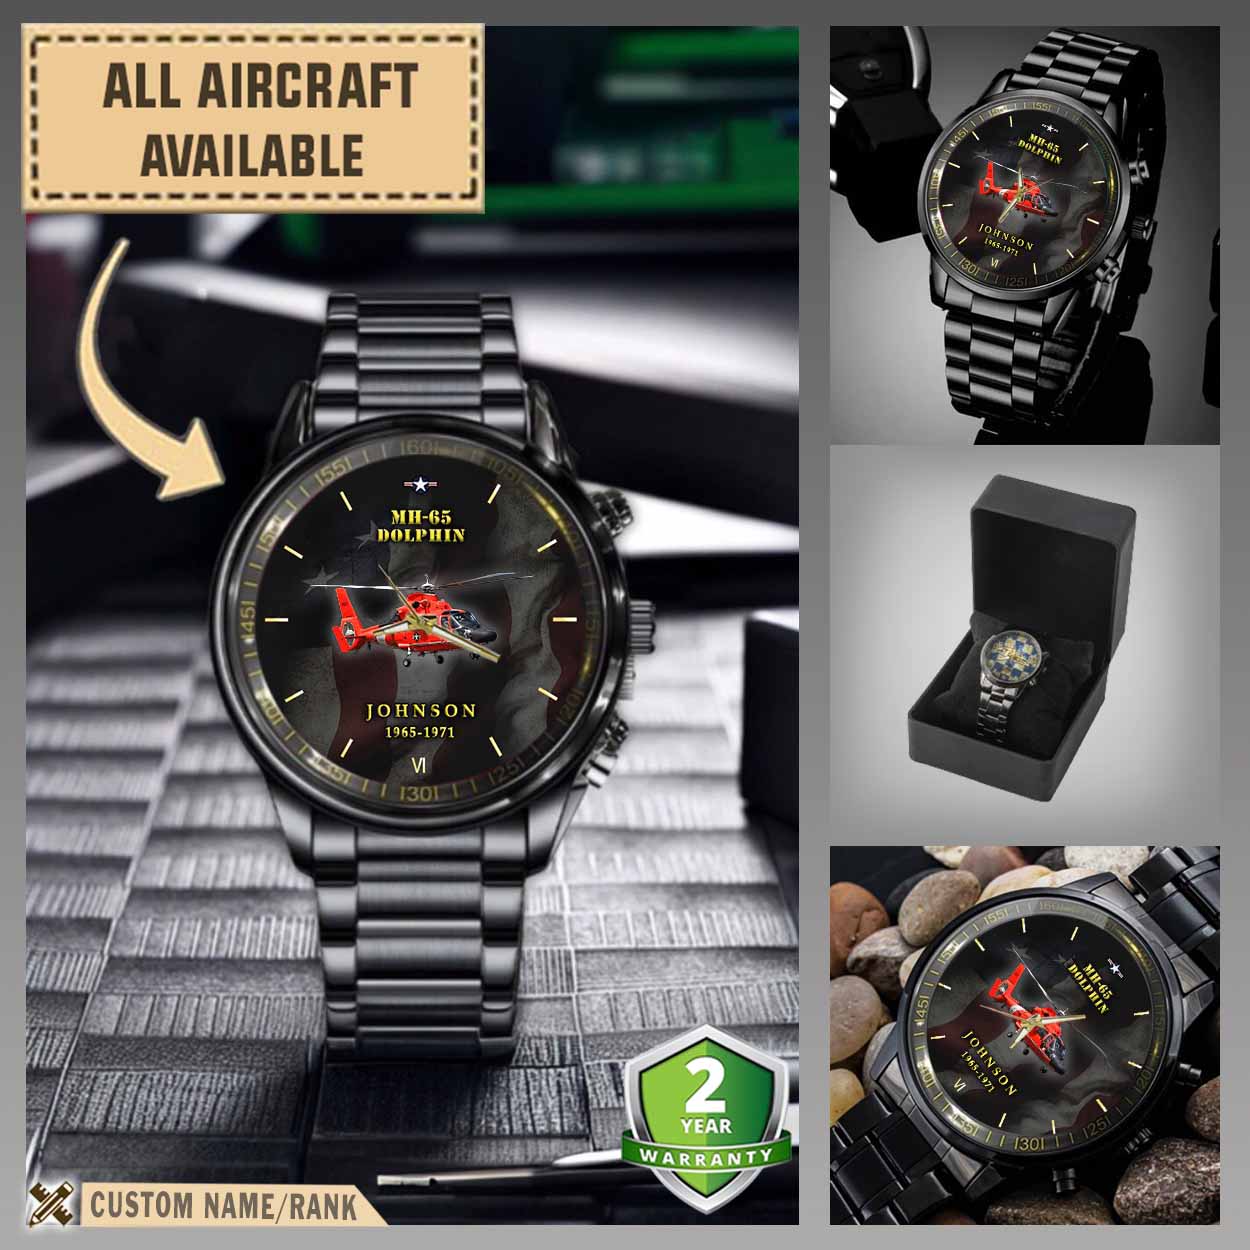 mh 65 dolphin hh 65 mh65 hh65aircraft black wrist watch 6vo6v